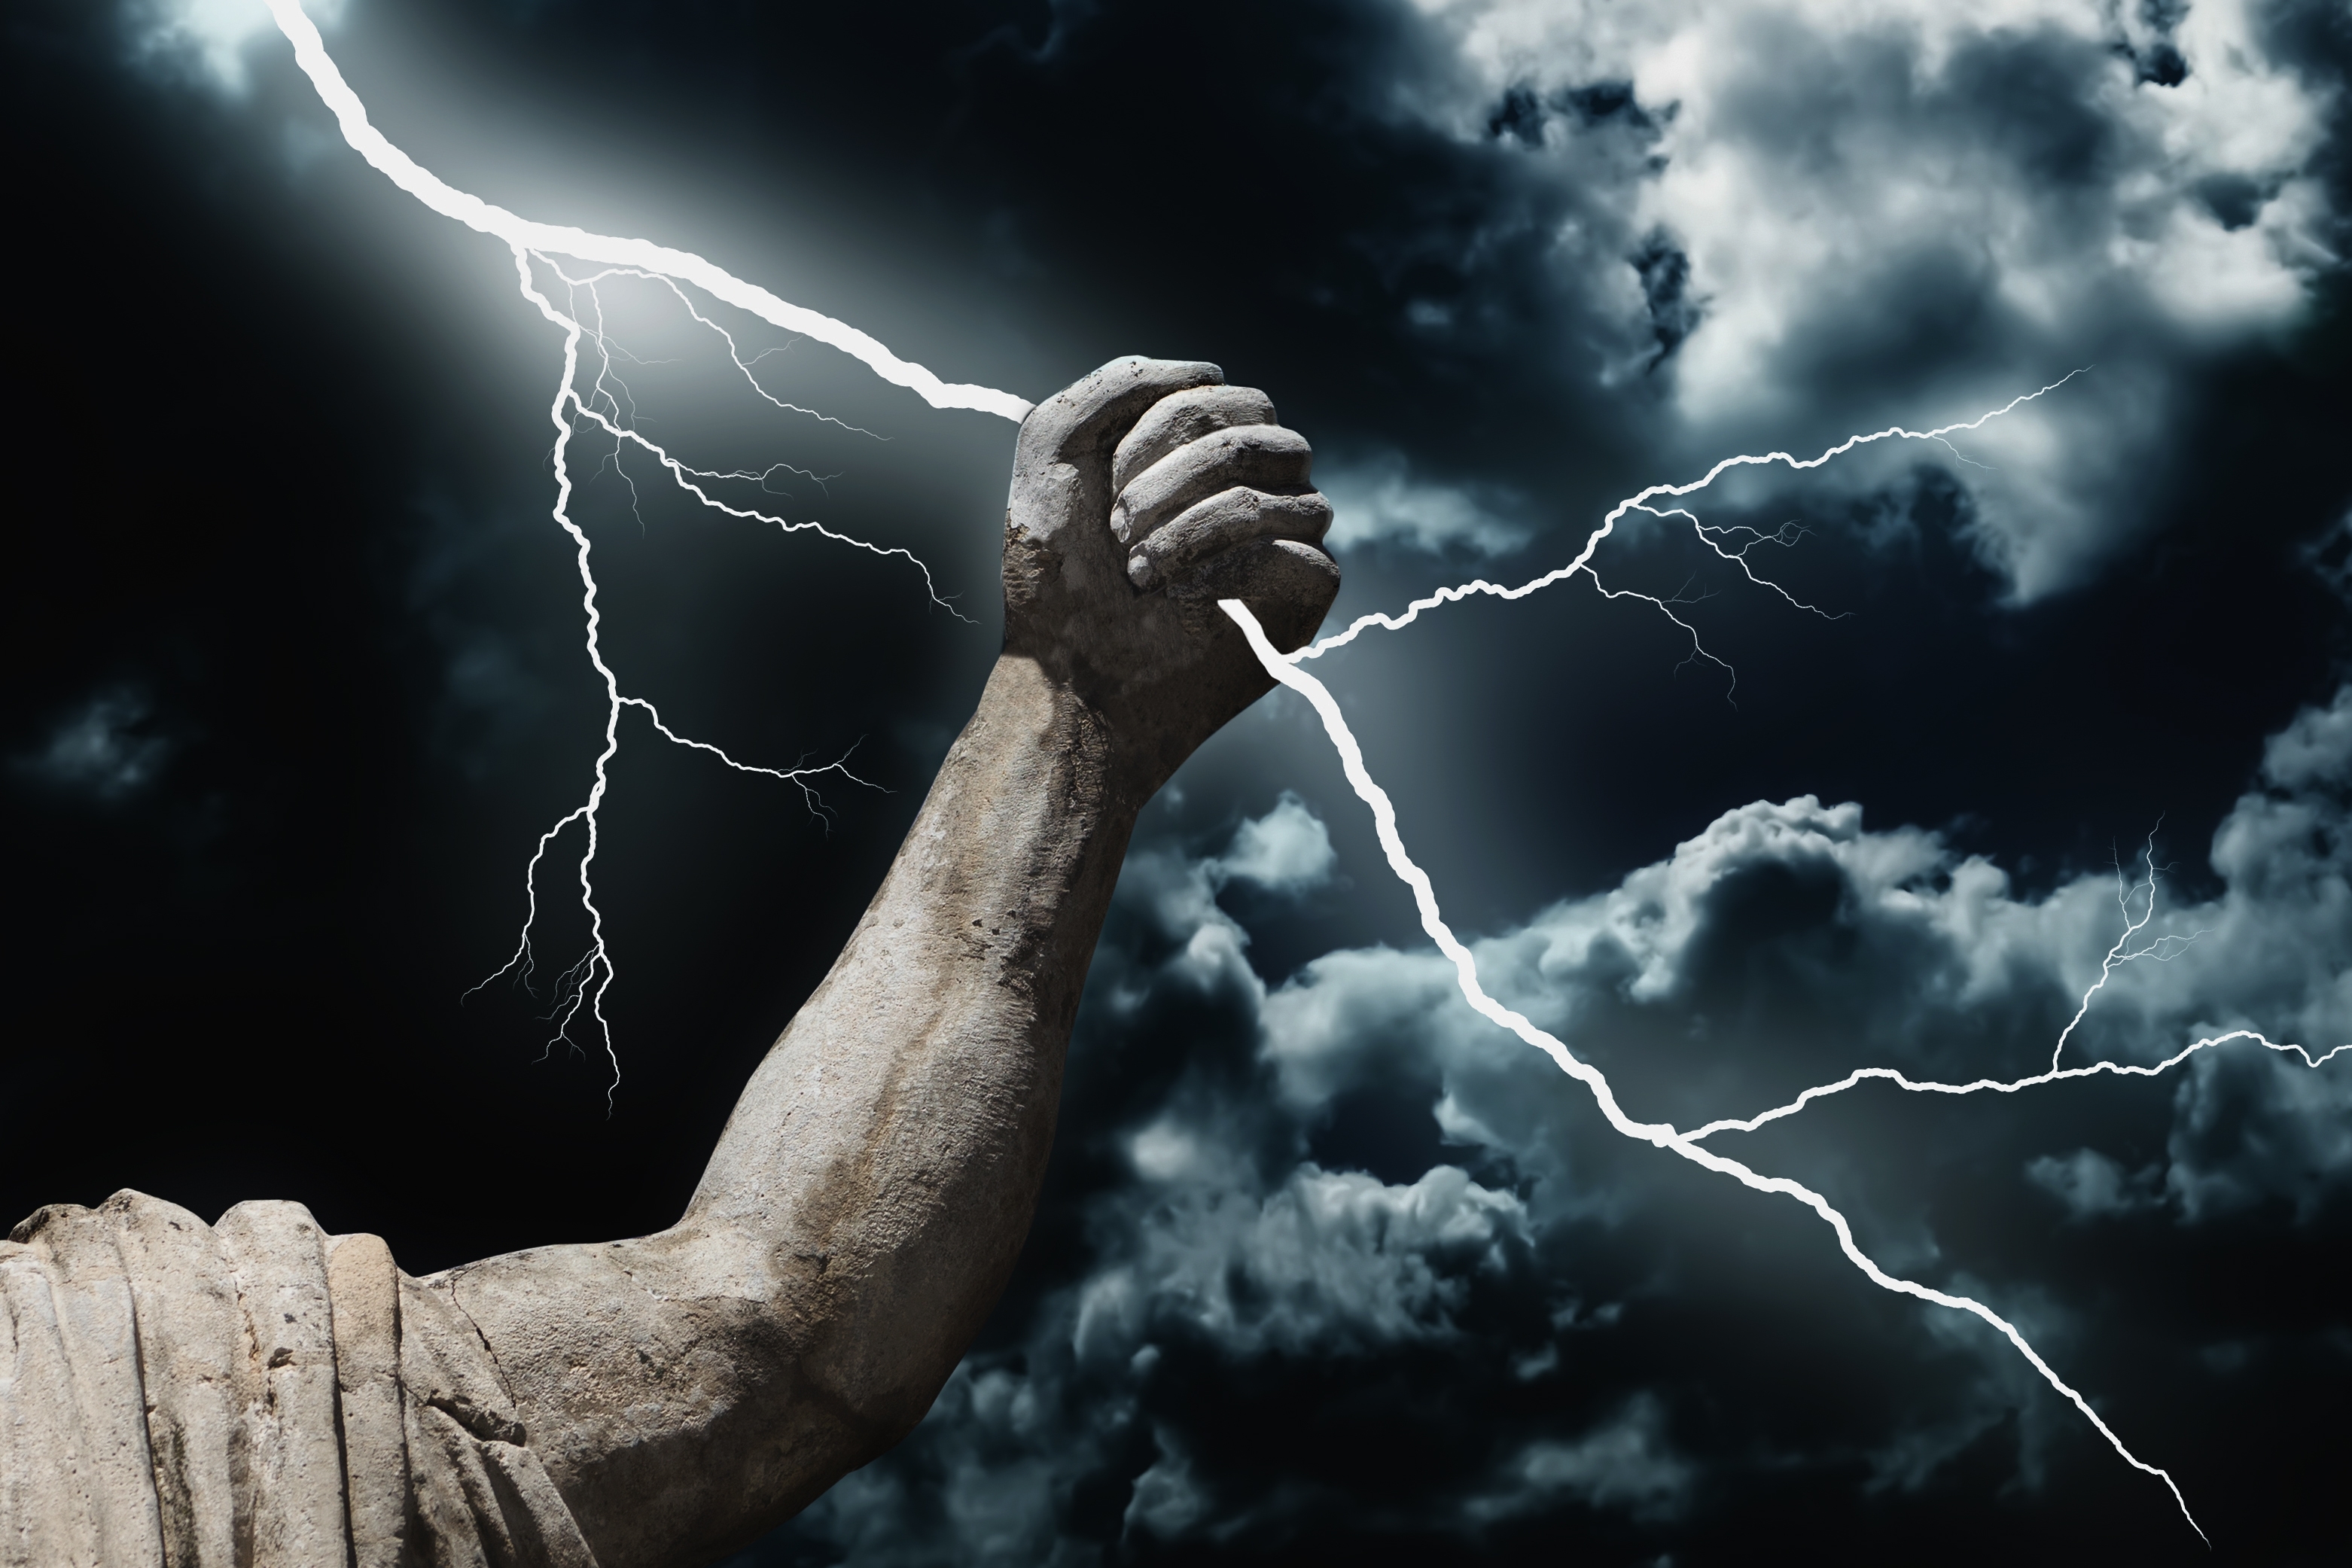 A statue's arm holding a lightning bolt